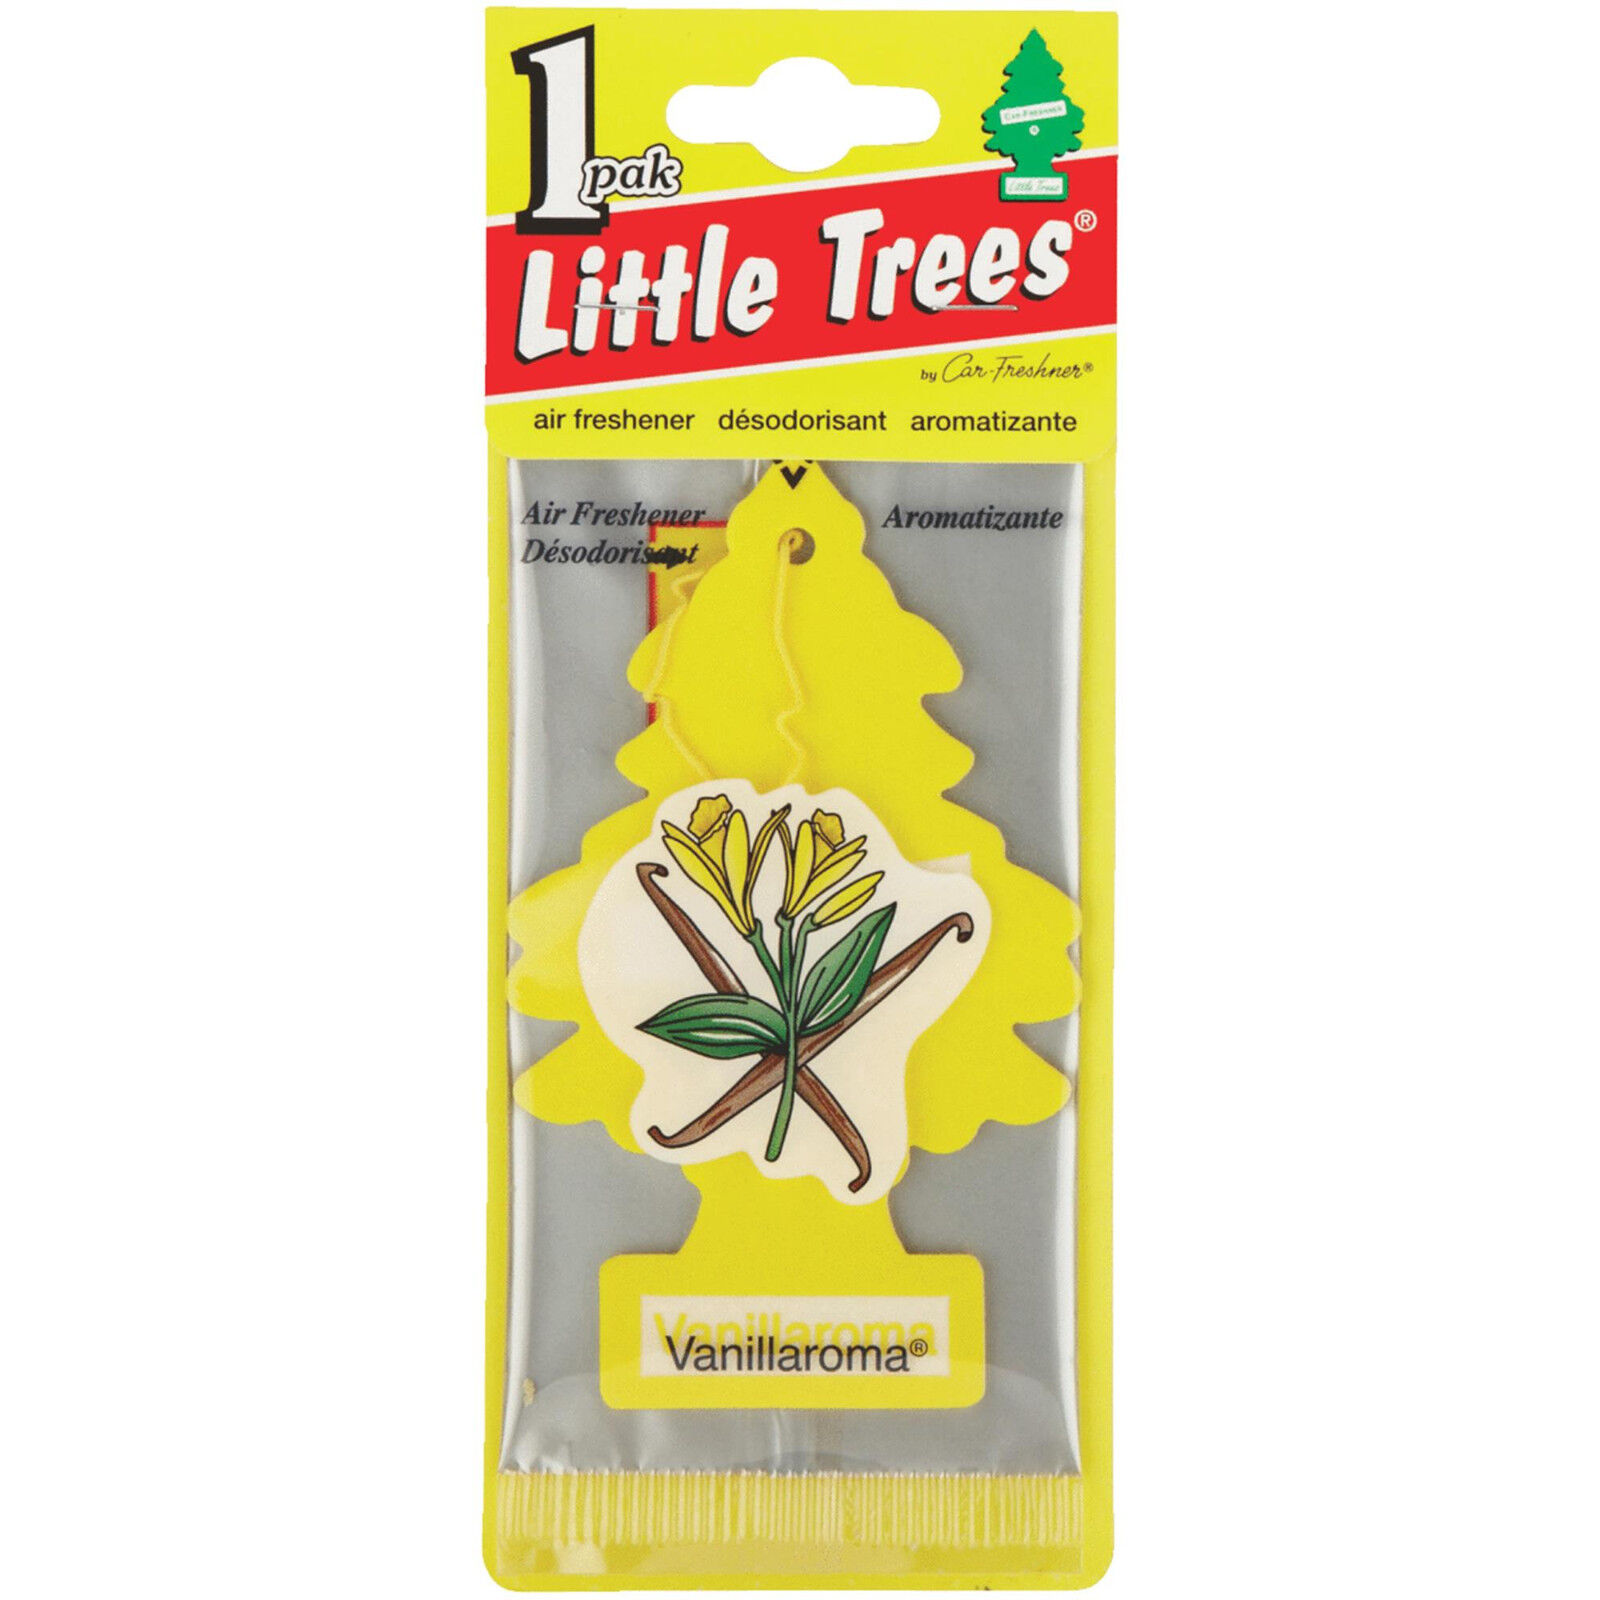  Freshener Vanillaroma  10105 Little Tree Vanilla Aroma  MADE IN USA Pack (24)  Little Trees U1P-10105 - фотография #9